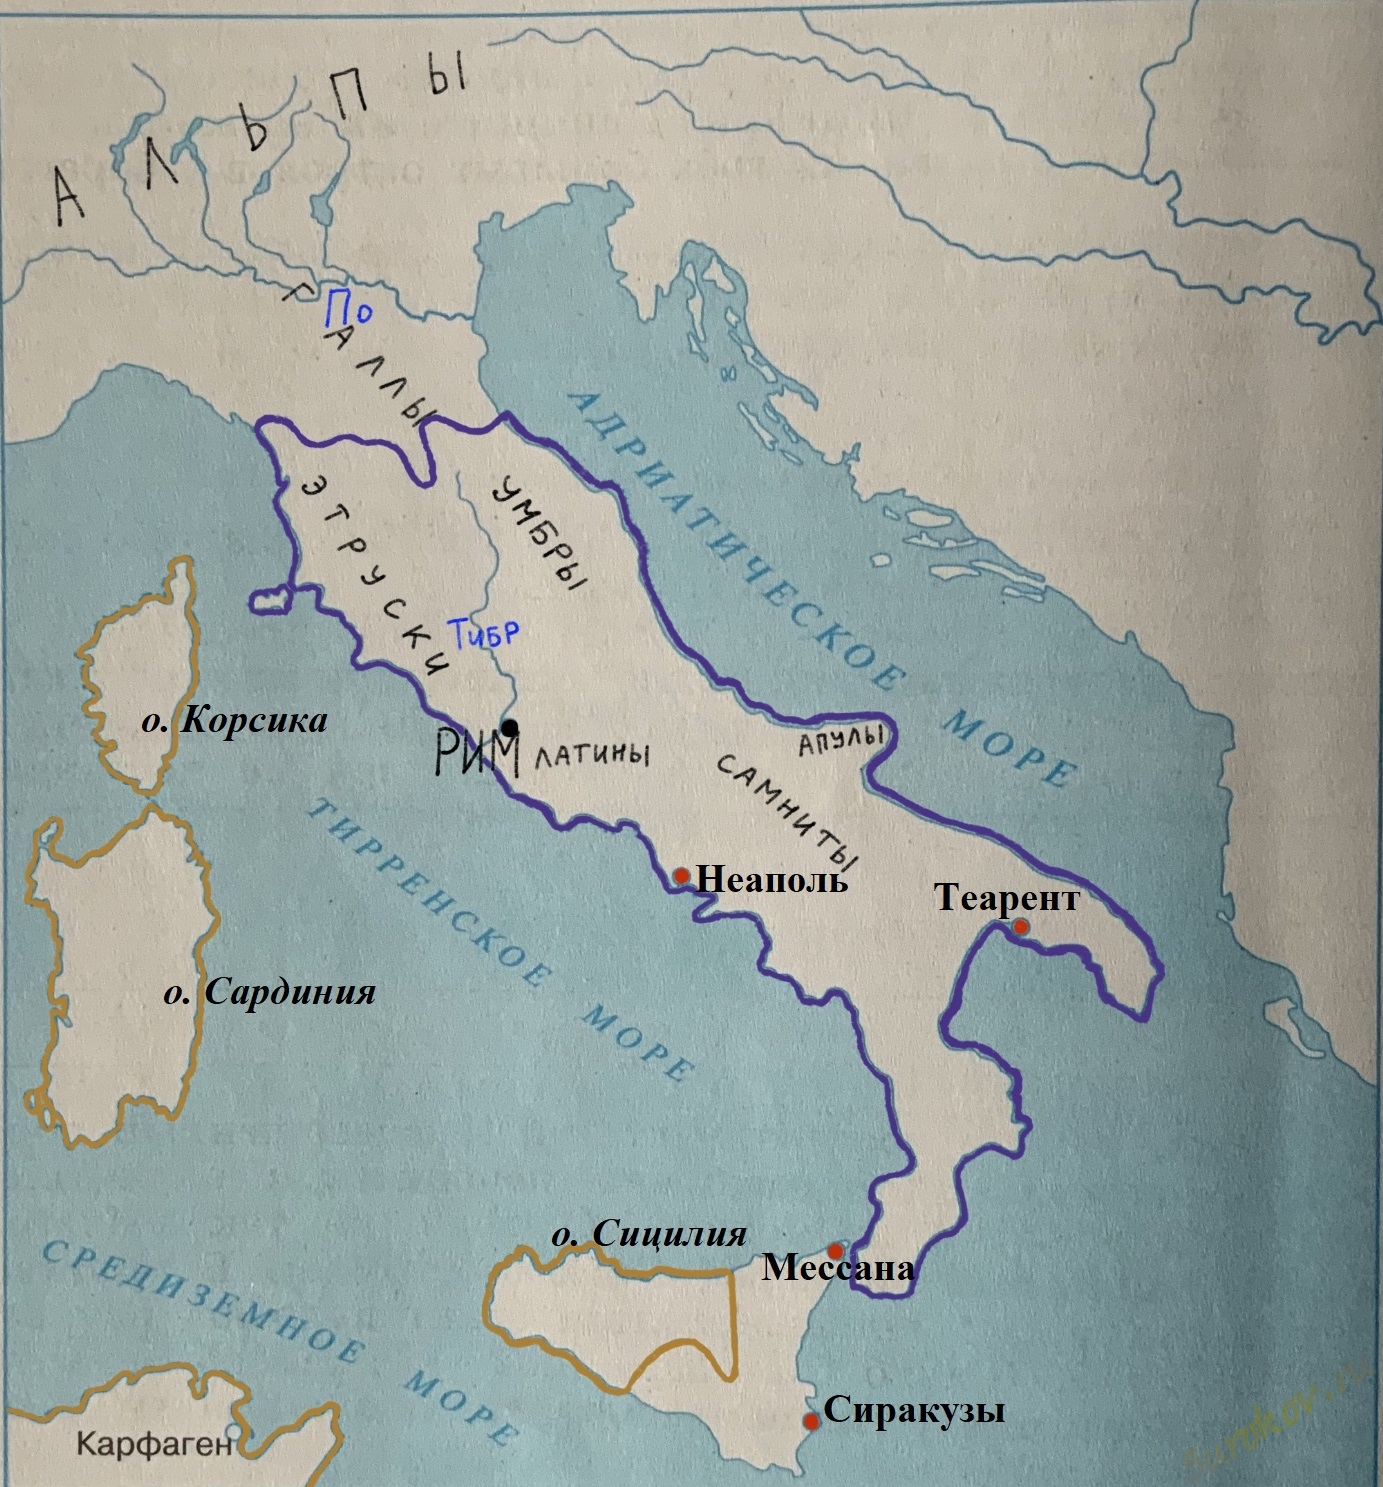 Где находится древний рим 5 класс. Река Тибр в древнем Риме на карте. Река Тибр в древнем Риме. Река Тибр древнейший Рим карта. Контурная карта древнего Рима Италии\.